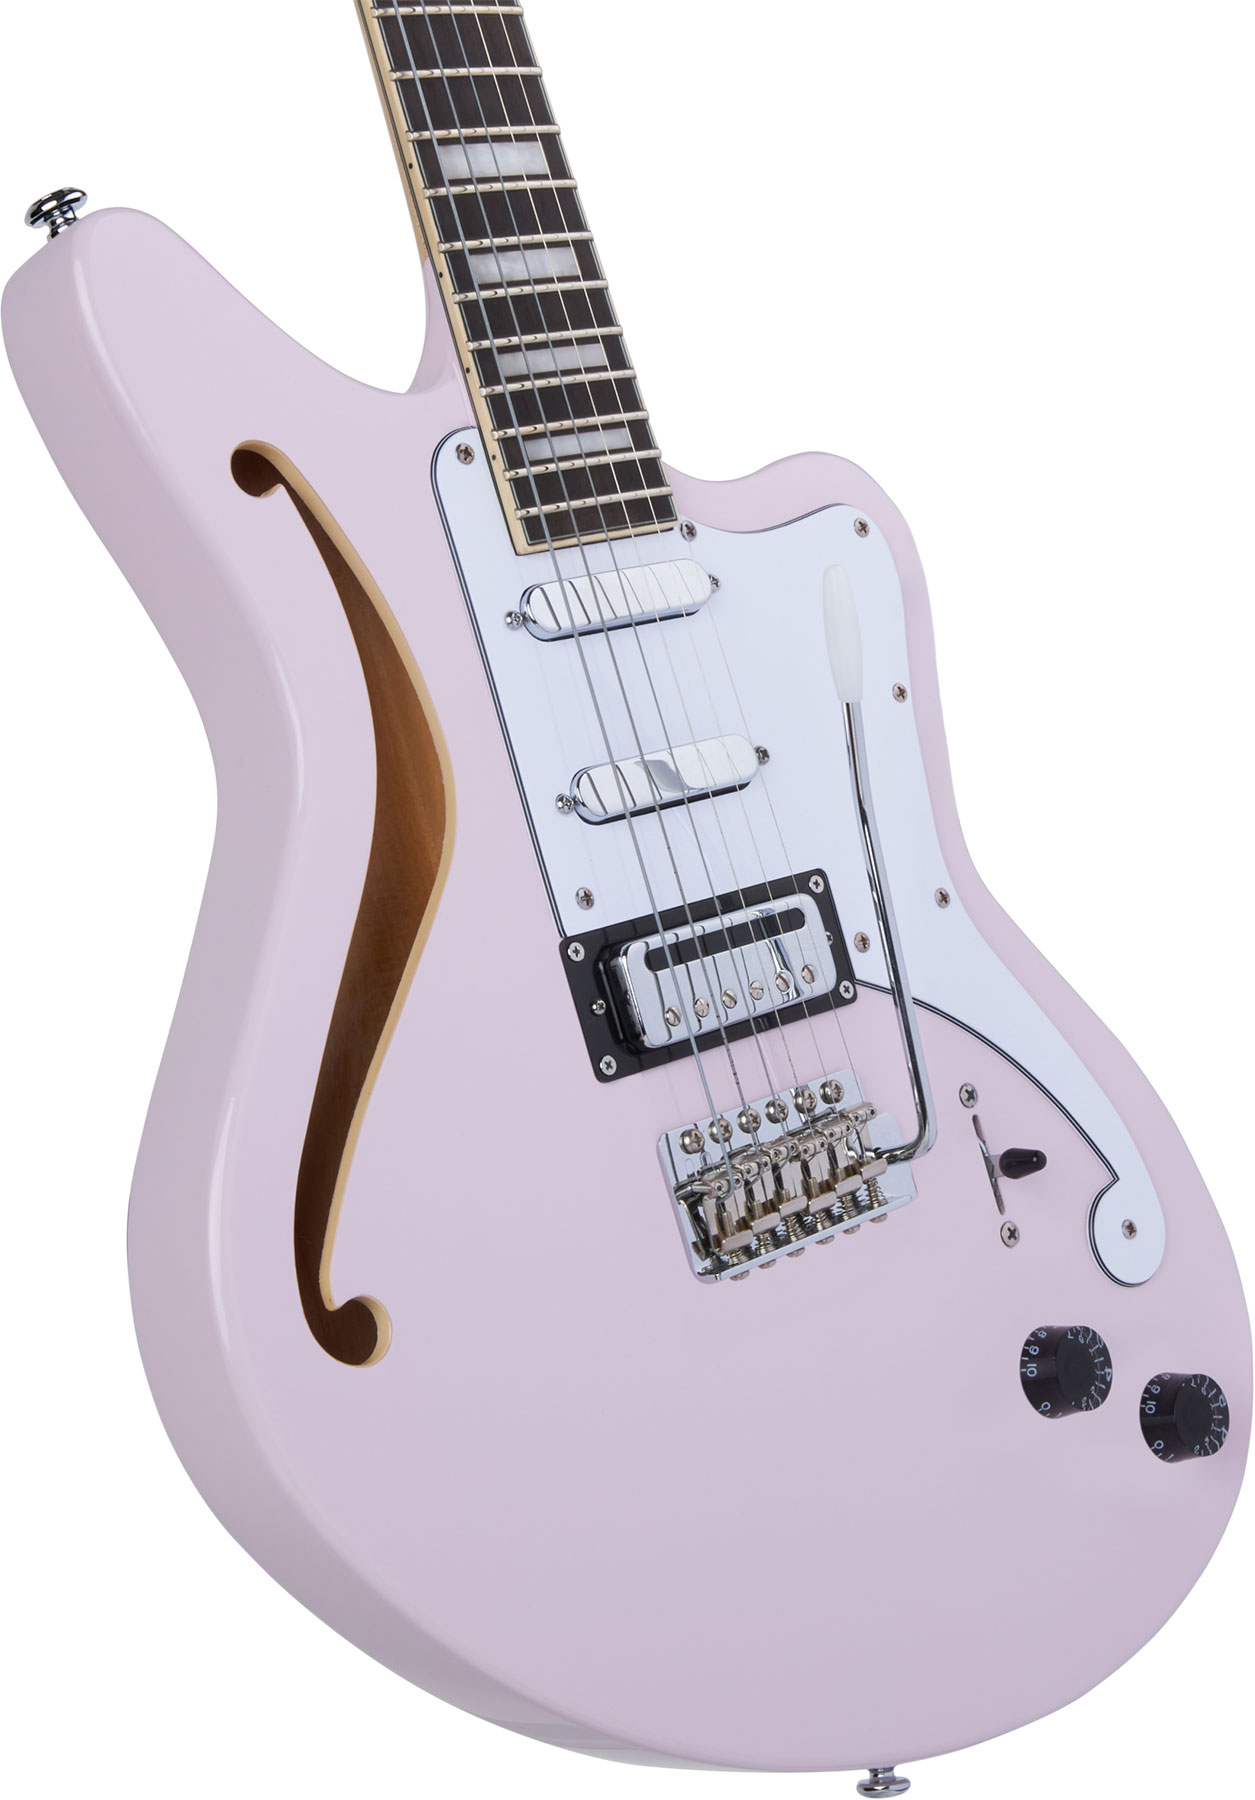 D'angelico Bedford Sh Premier Hss Trem Ova - Shell Pink - Semi-hollow electric guitar - Variation 3